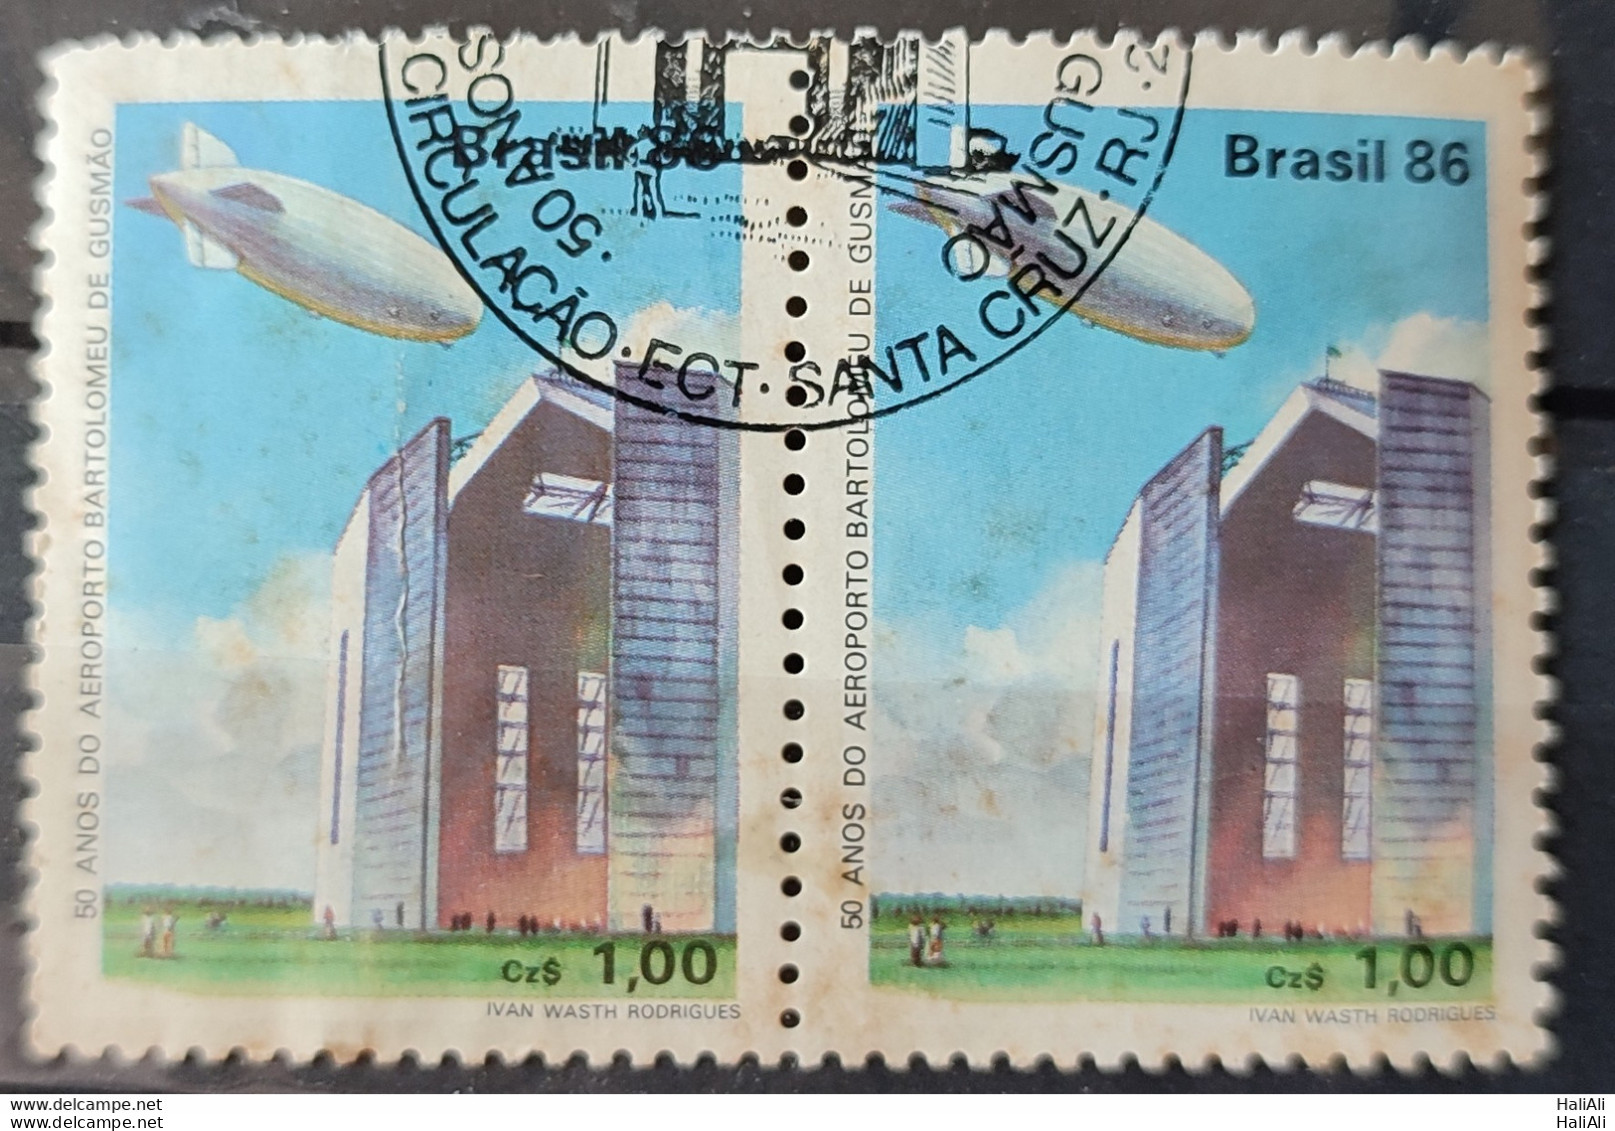 C 1541 Brazil Stamp 50 Years Airport Bartolomeu De Gusmao Balloon Hangar 1986 Dupla Circulated 2.jpg - Usados